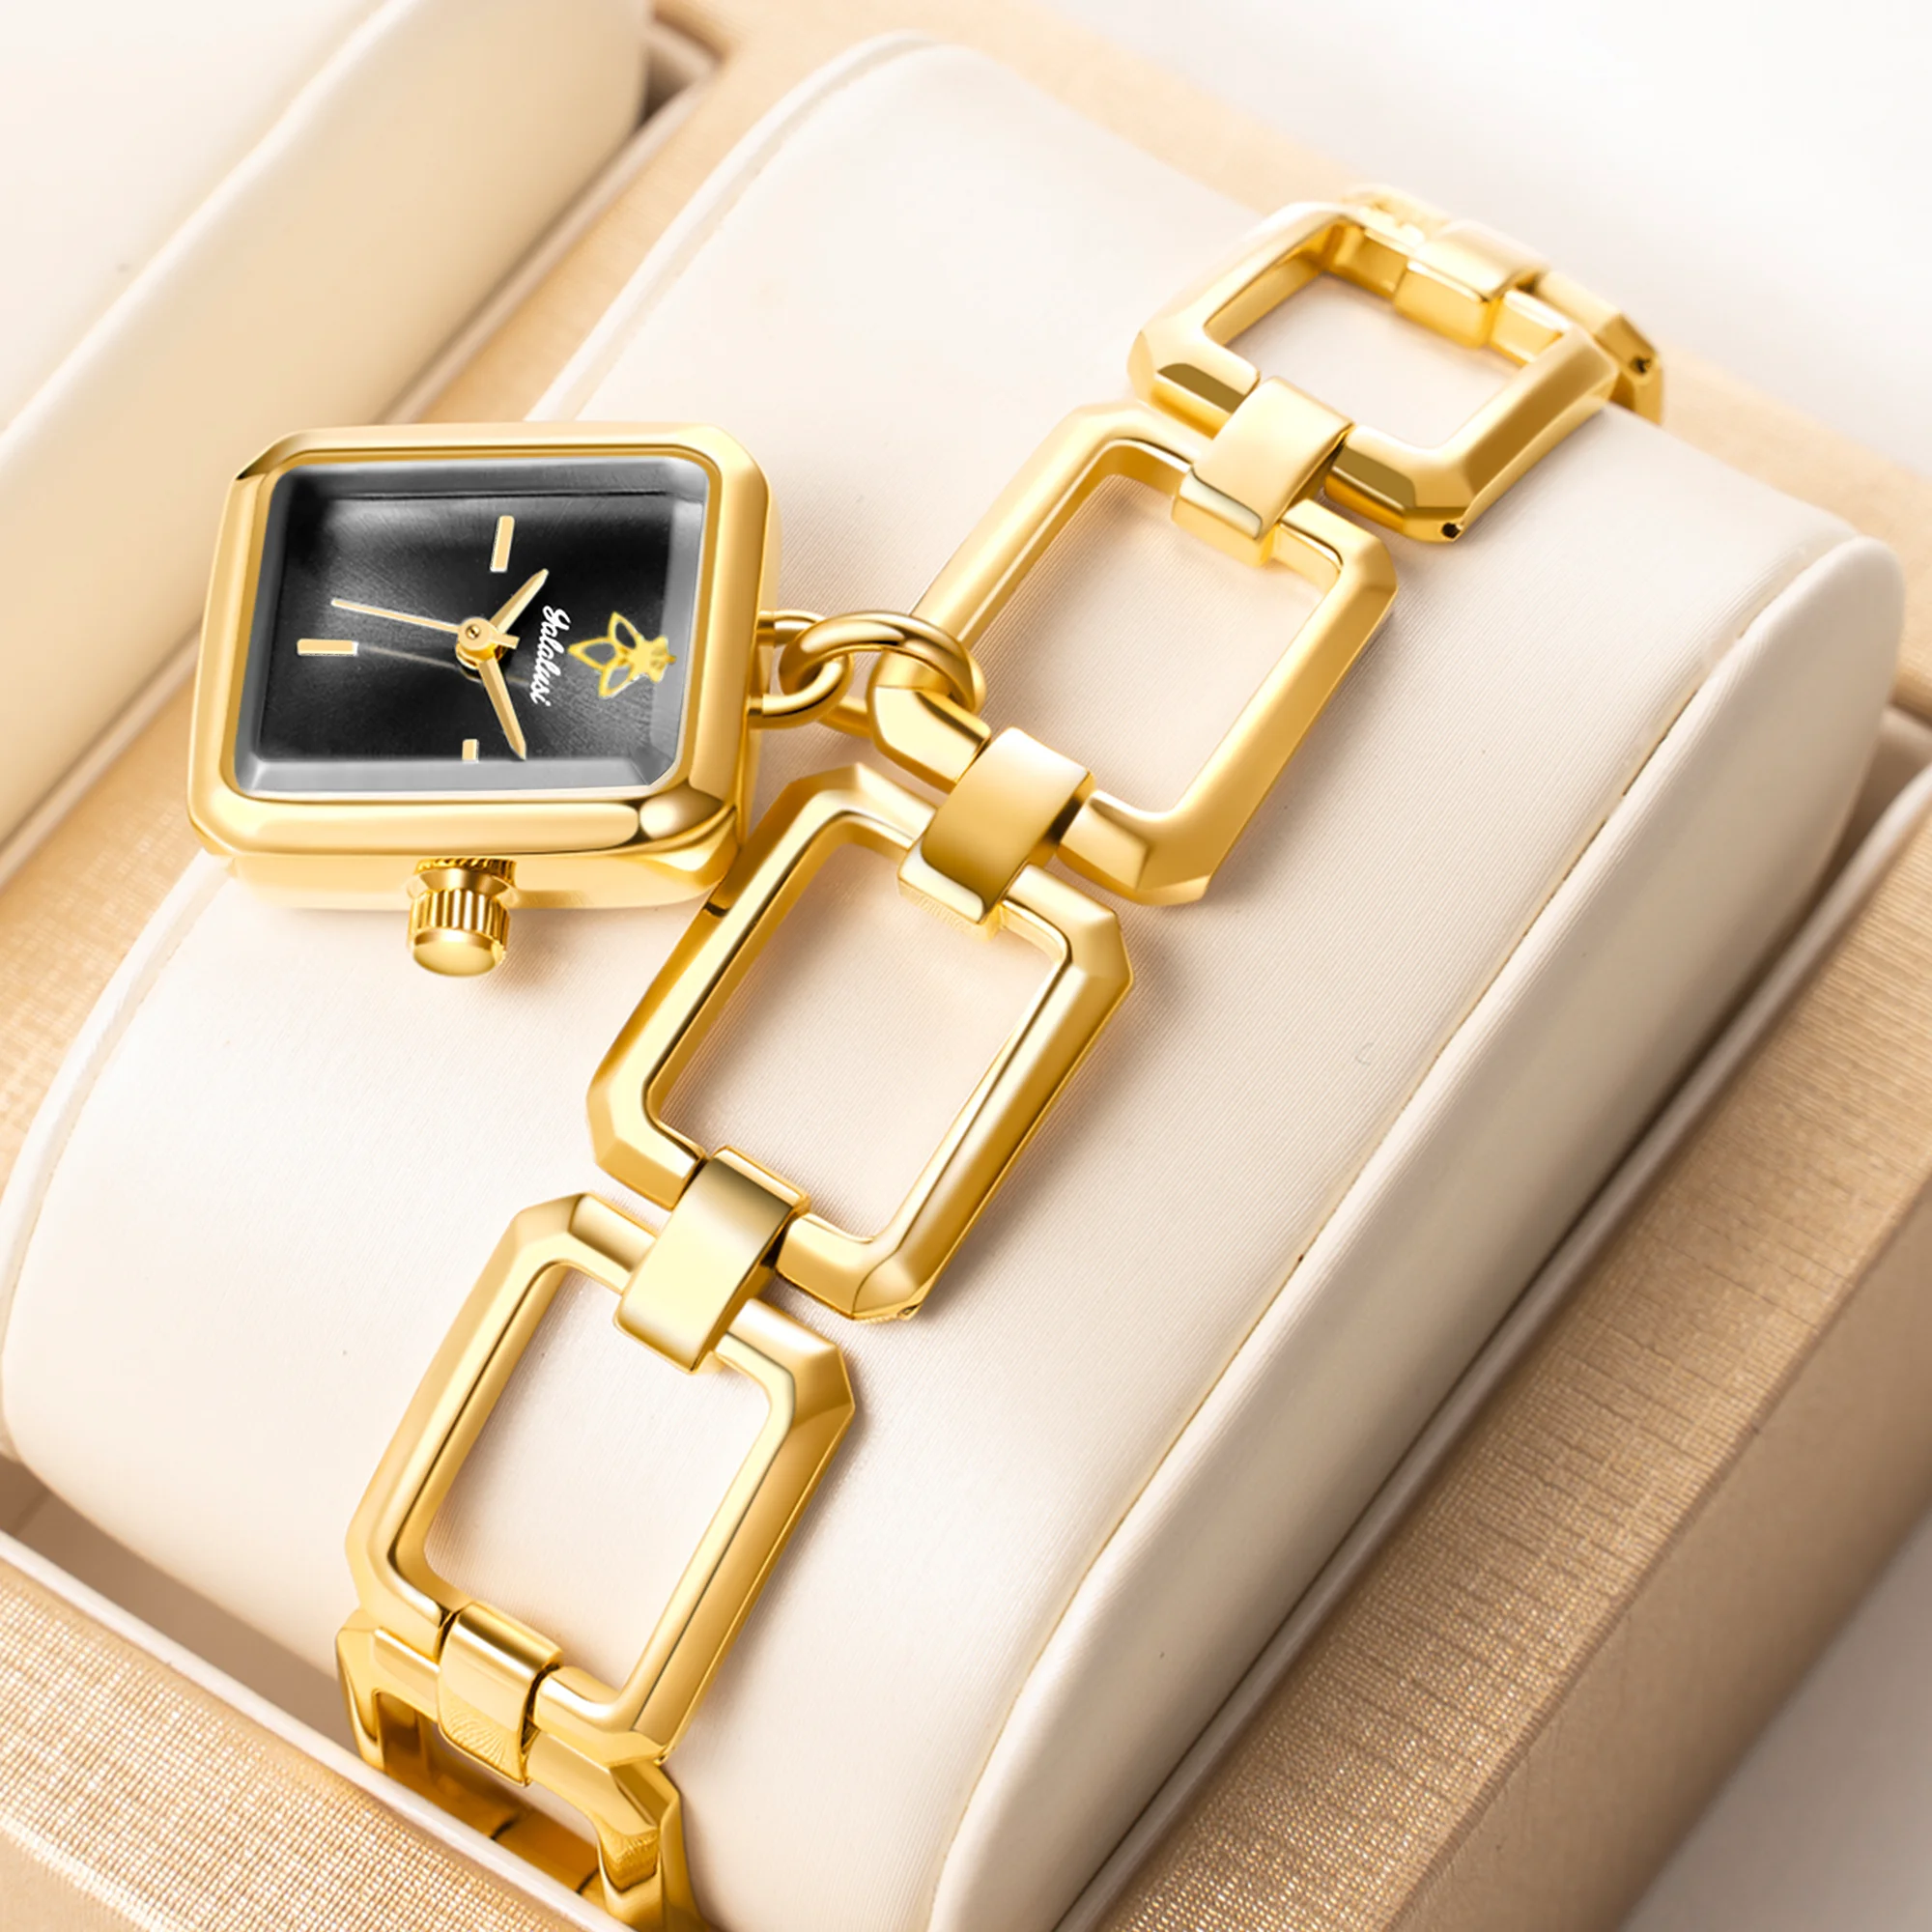 

YaLaLuSi Newest Ladies Quartz Watch Ladies Small Watch Gold Case Black Face Luxury Casual Fashion Bracelet